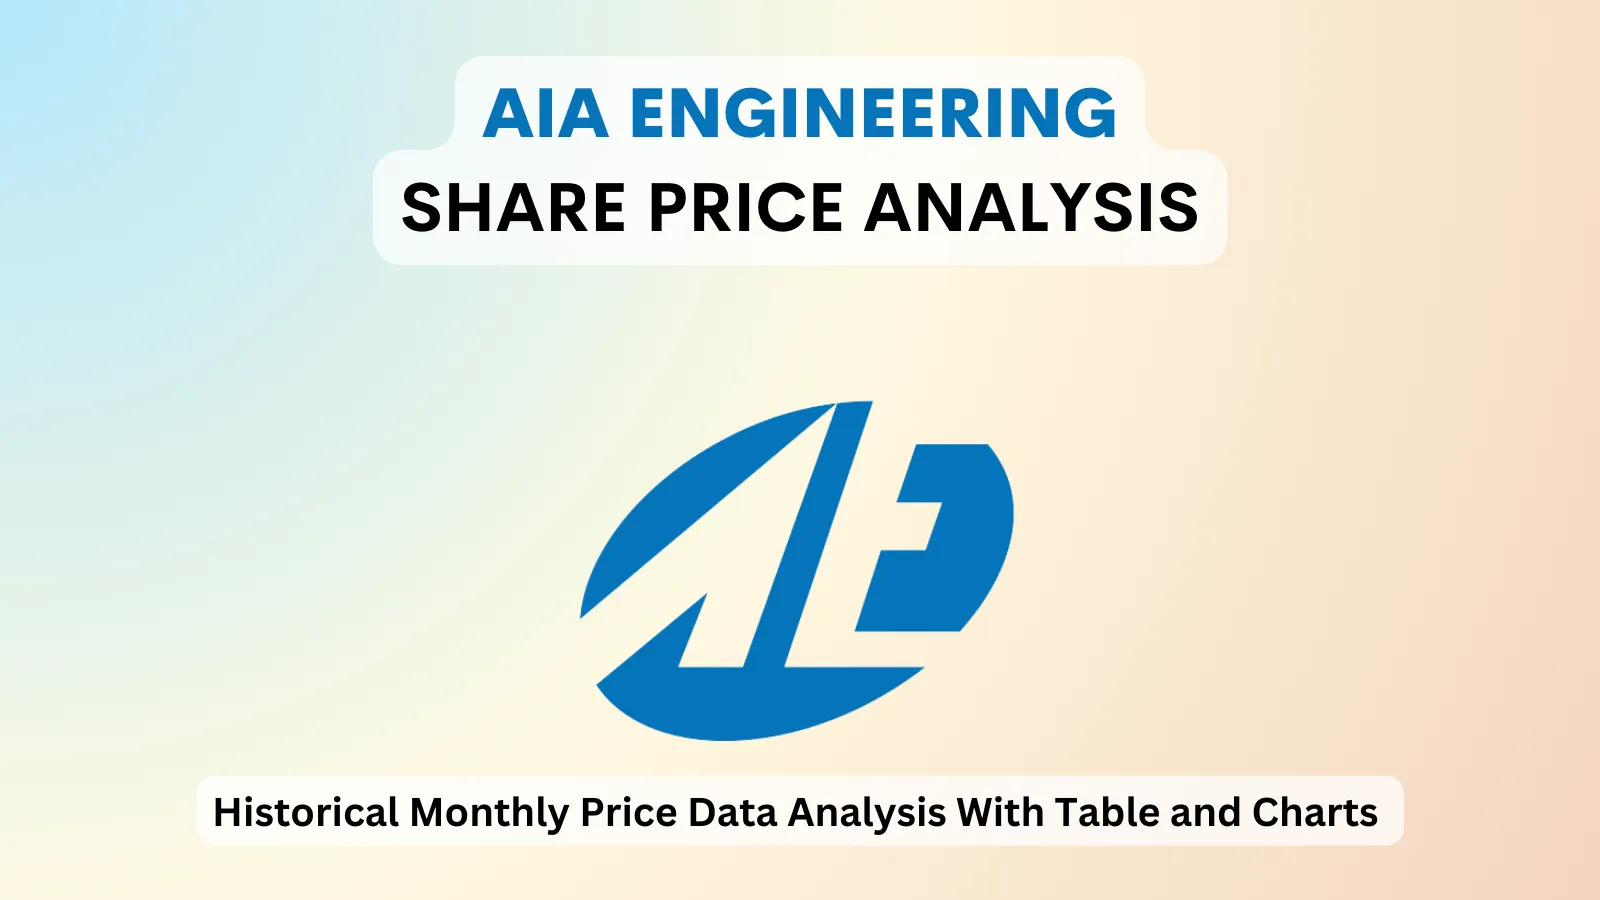 AIA Engineering share price analysis